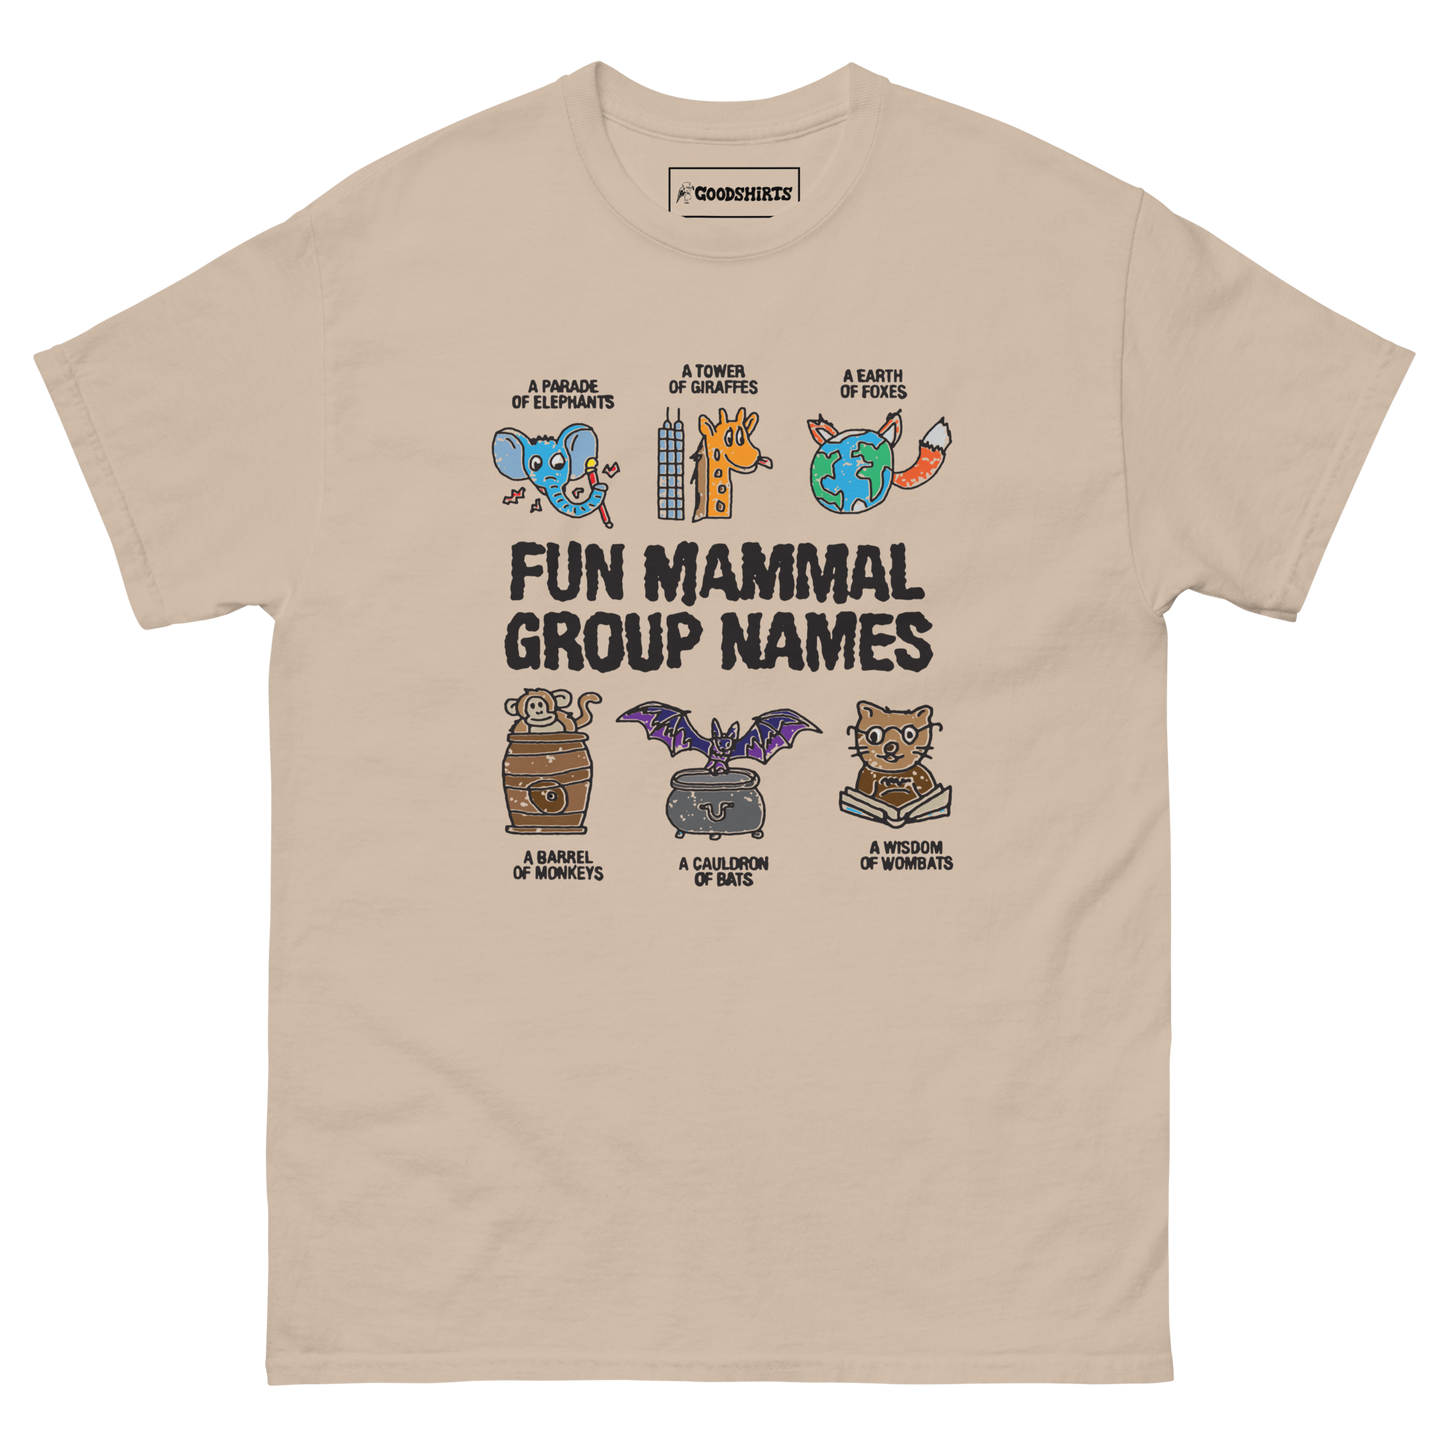 Fun Mammal Group Names.